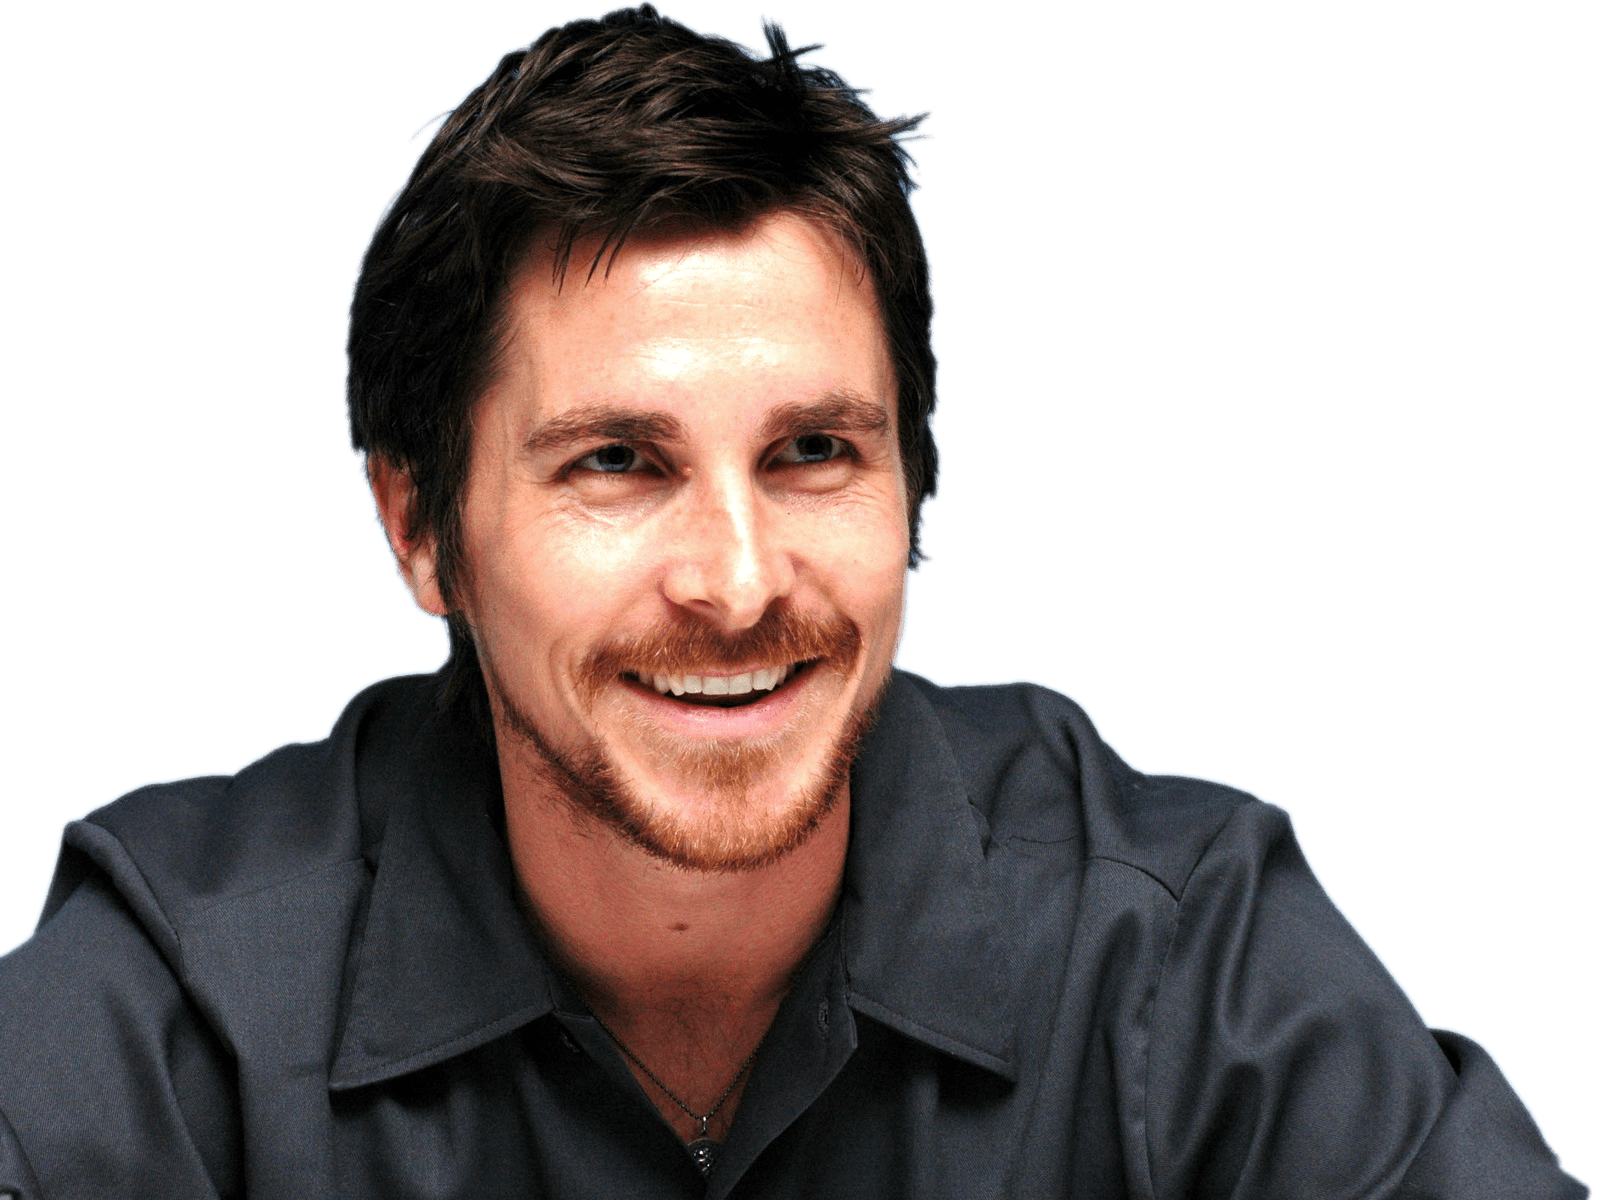 Christian Bale Smiling Clip arts